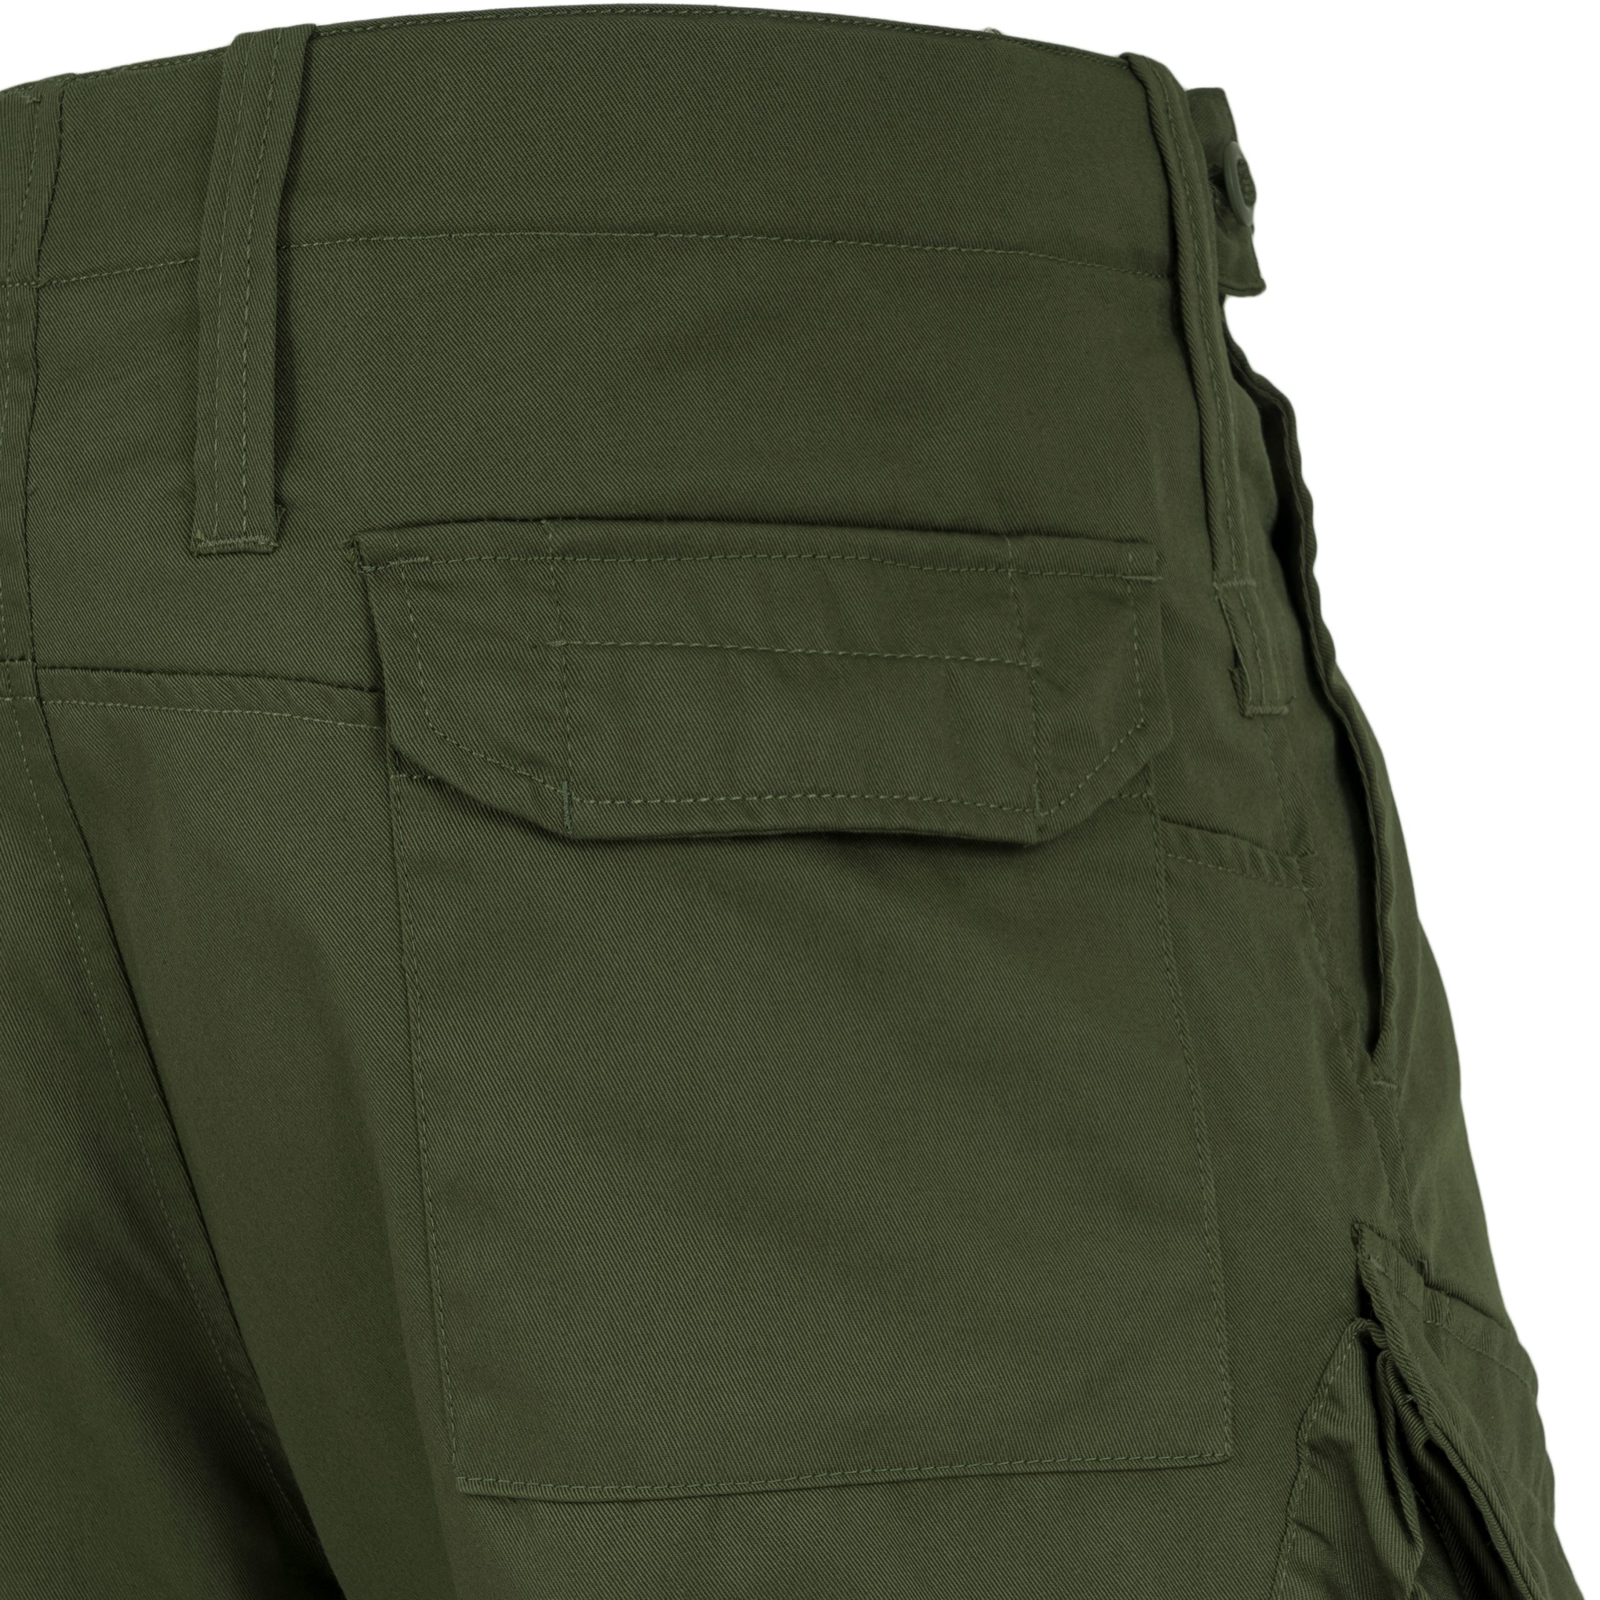 Highlander Elite Combat Trousers HMTC MTP Style Military Cargo Pants  Ripstop | eBay